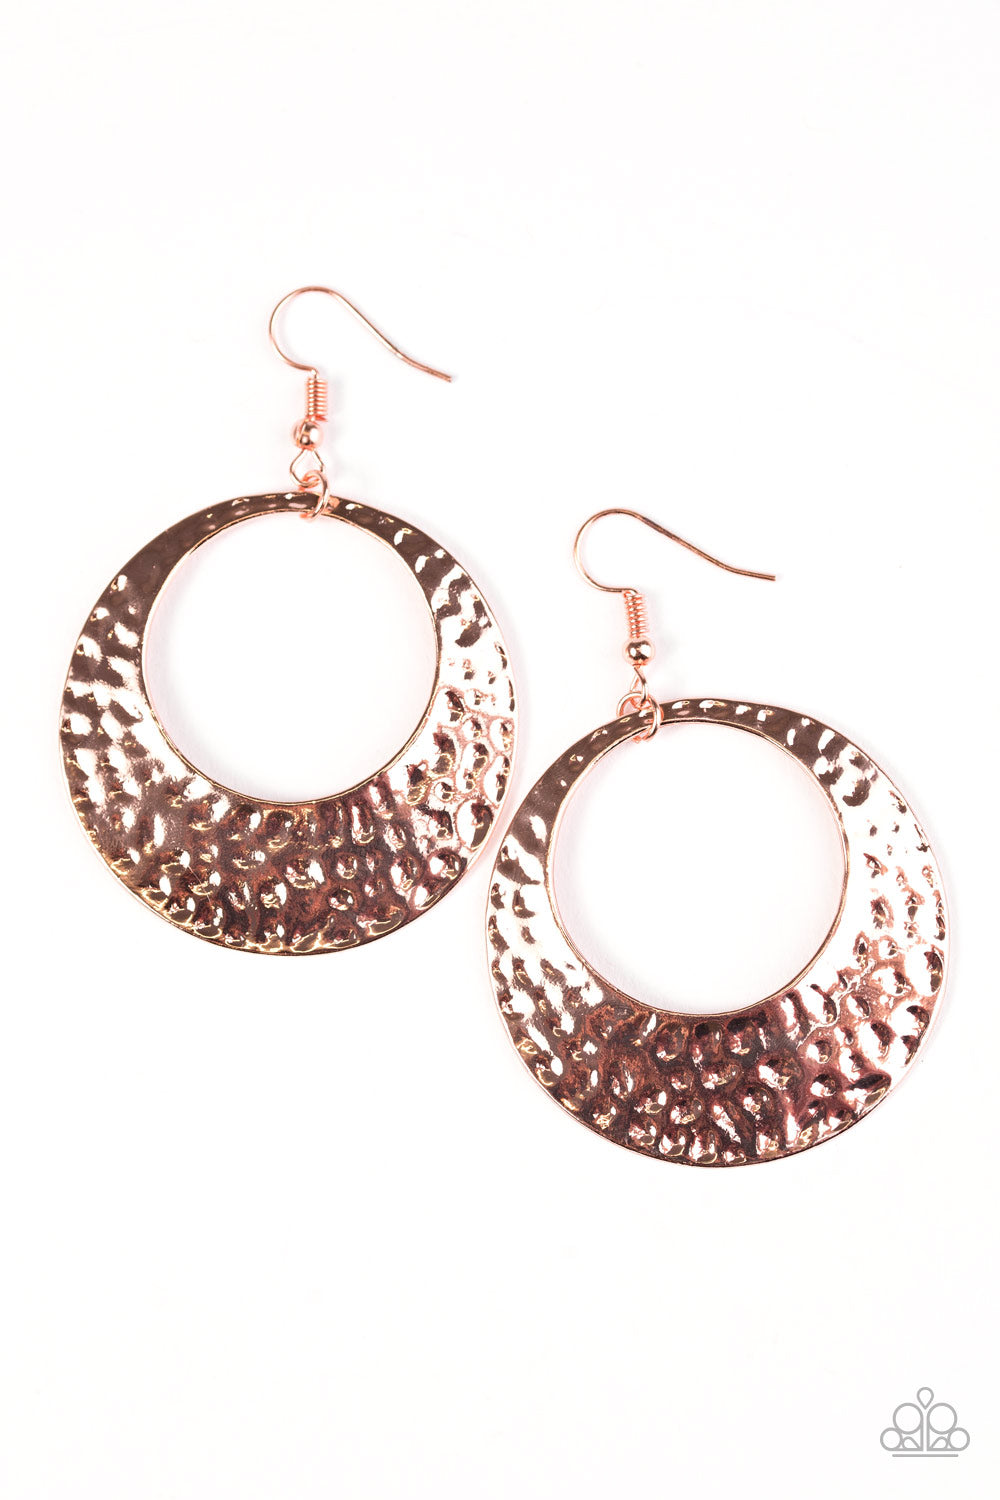 Casual Shimmer - Copper - Paparazzi earrings